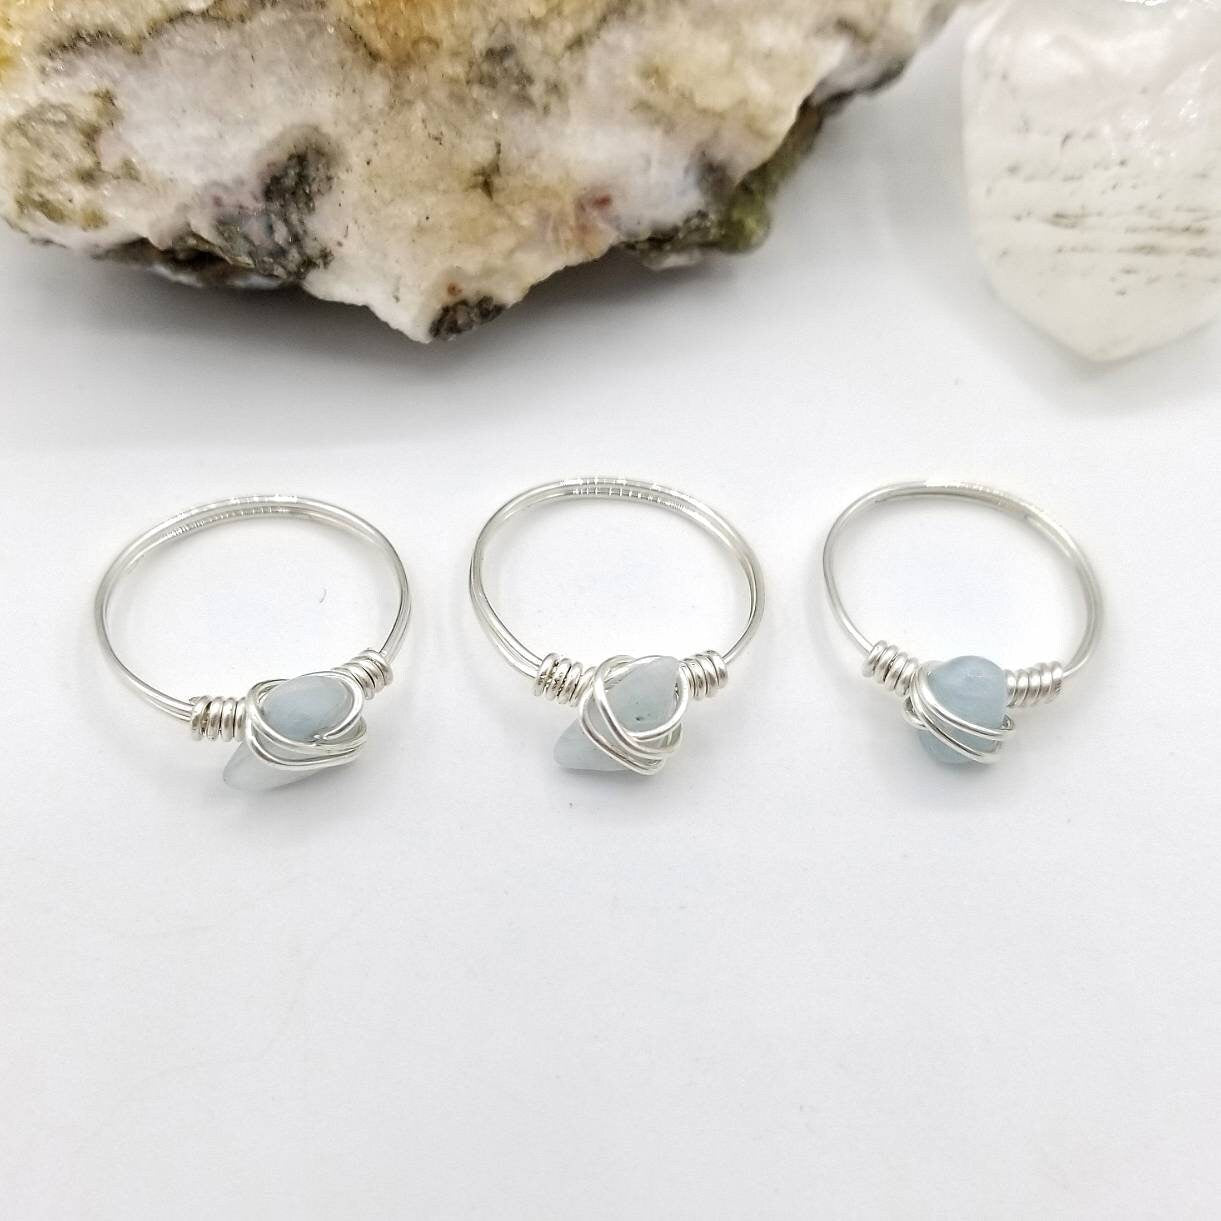 Aquamarine Ring, Silver Wire Wrapped Ring, Aquamarine Jewelry